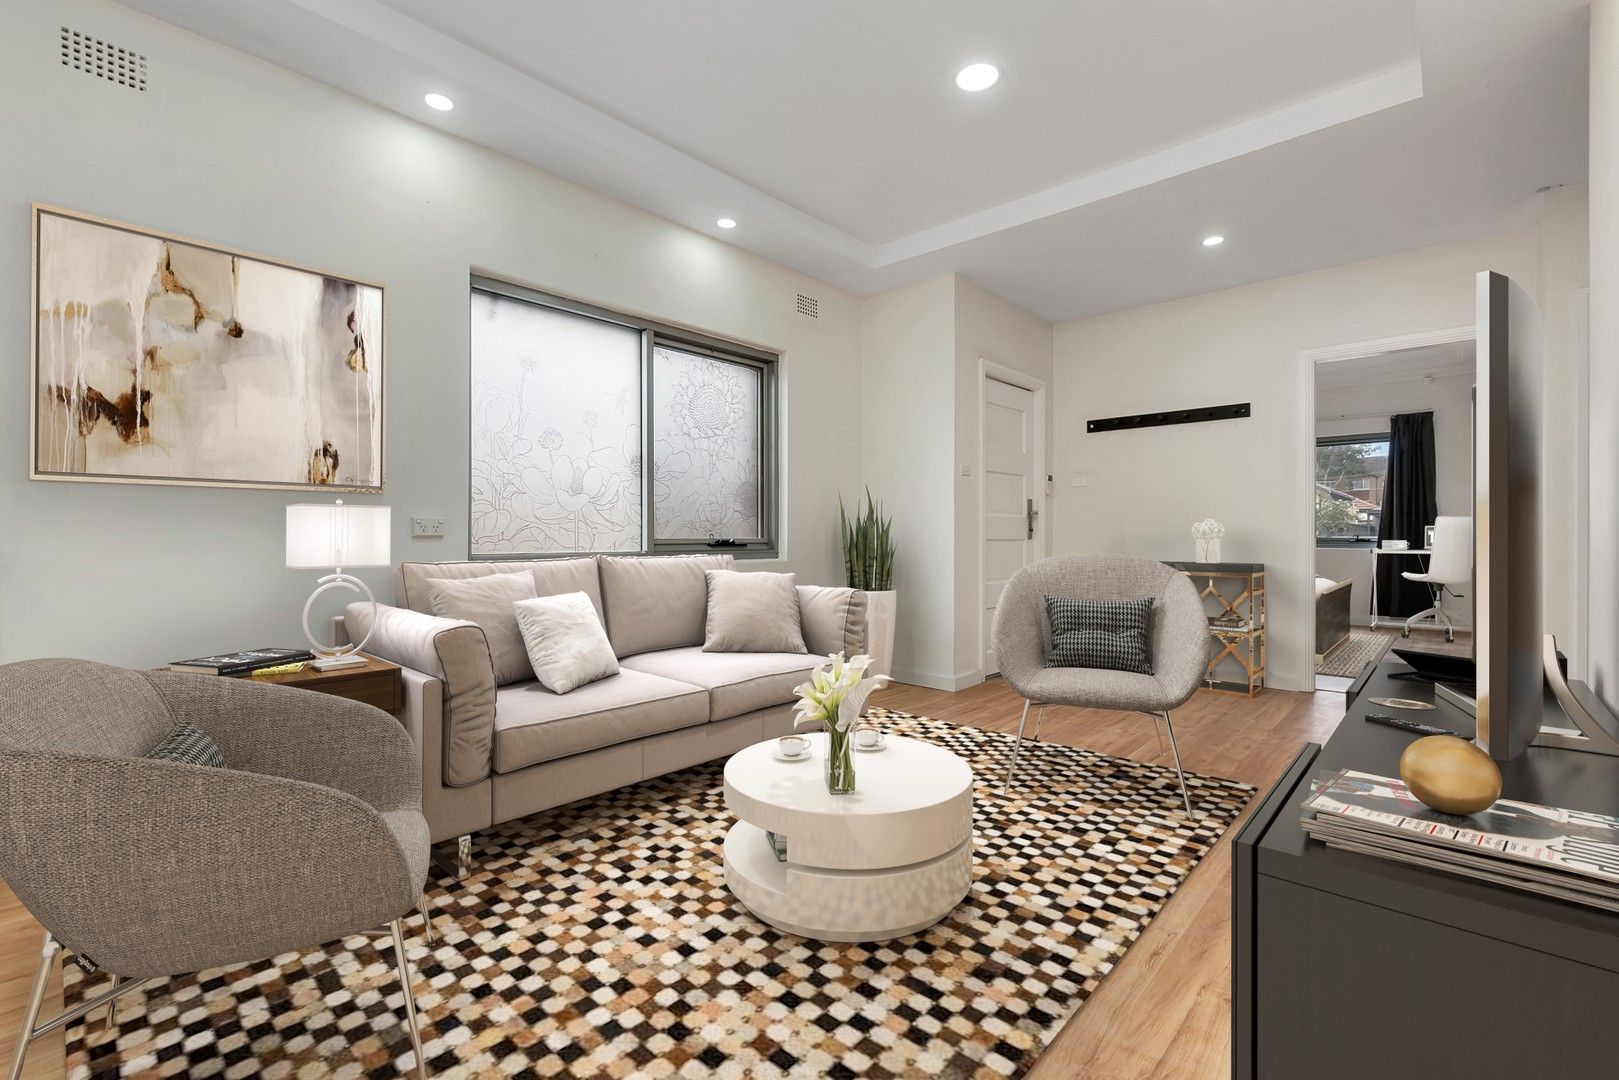 3 bedrooms House in 12 Macquarie Street ROSEBERY NSW, 2018